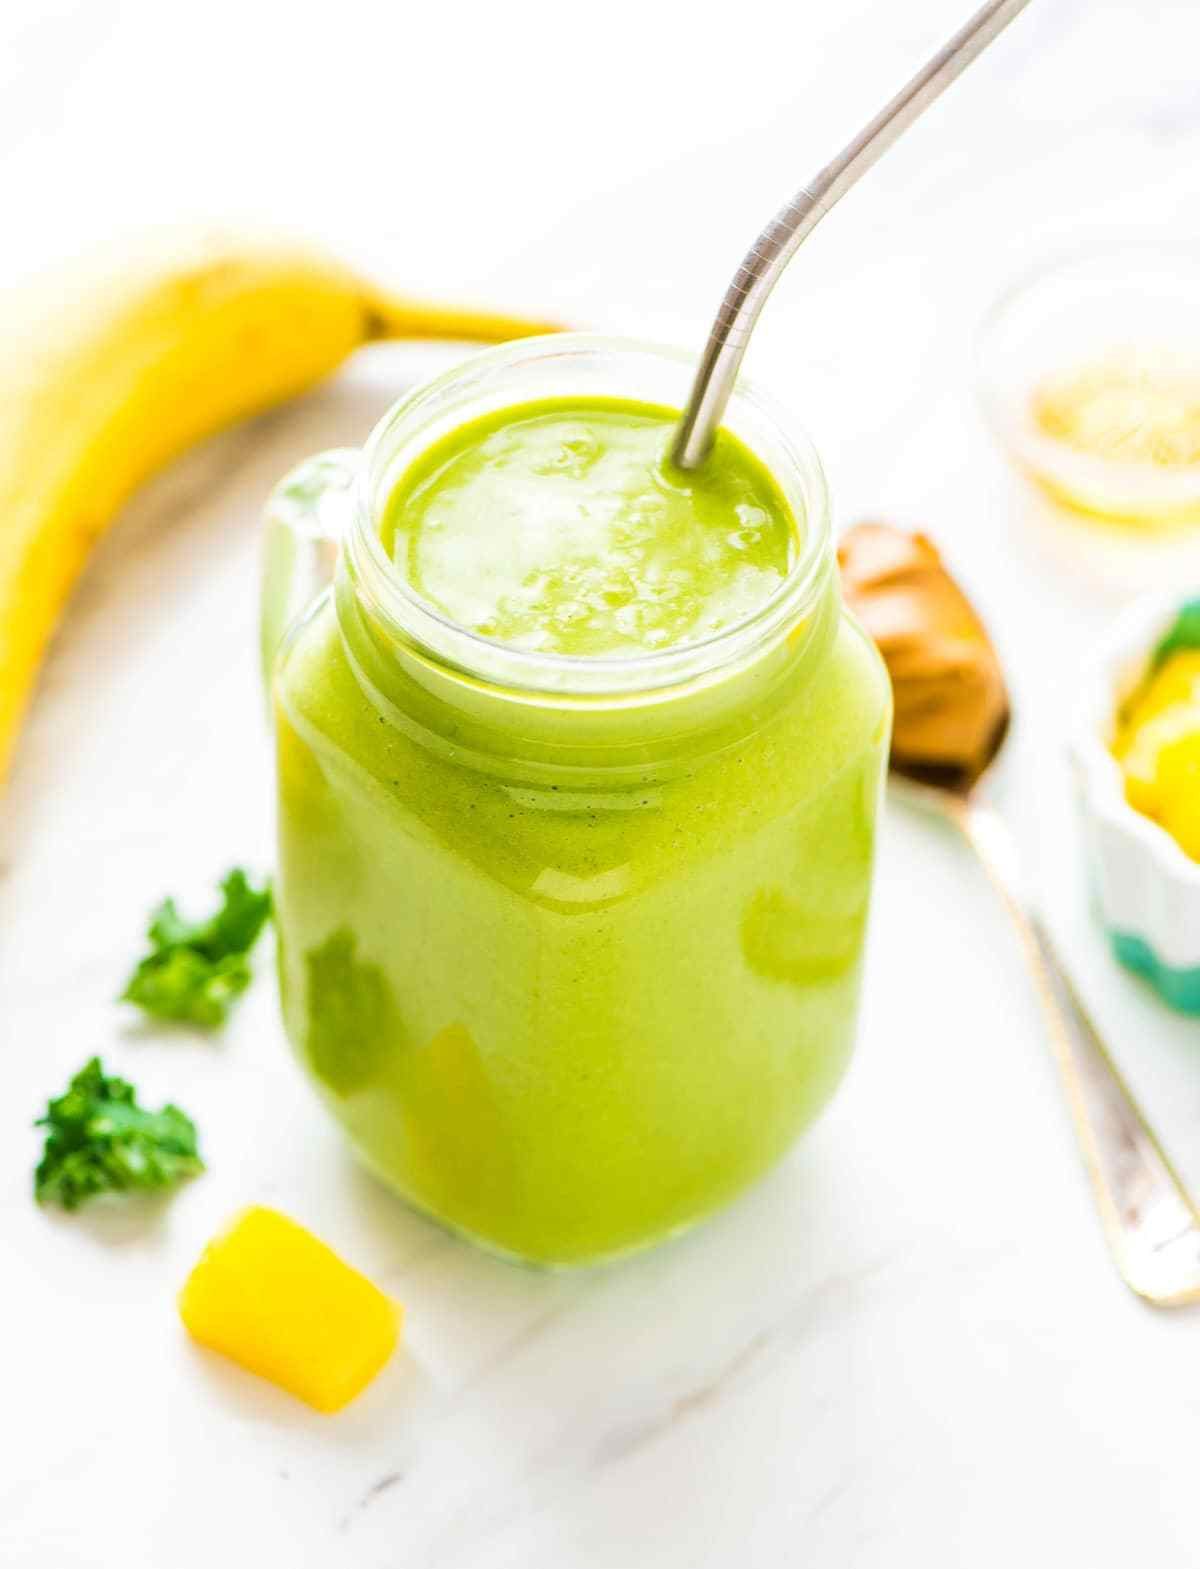 kale-pineapple-smoothie-recipe-5037697